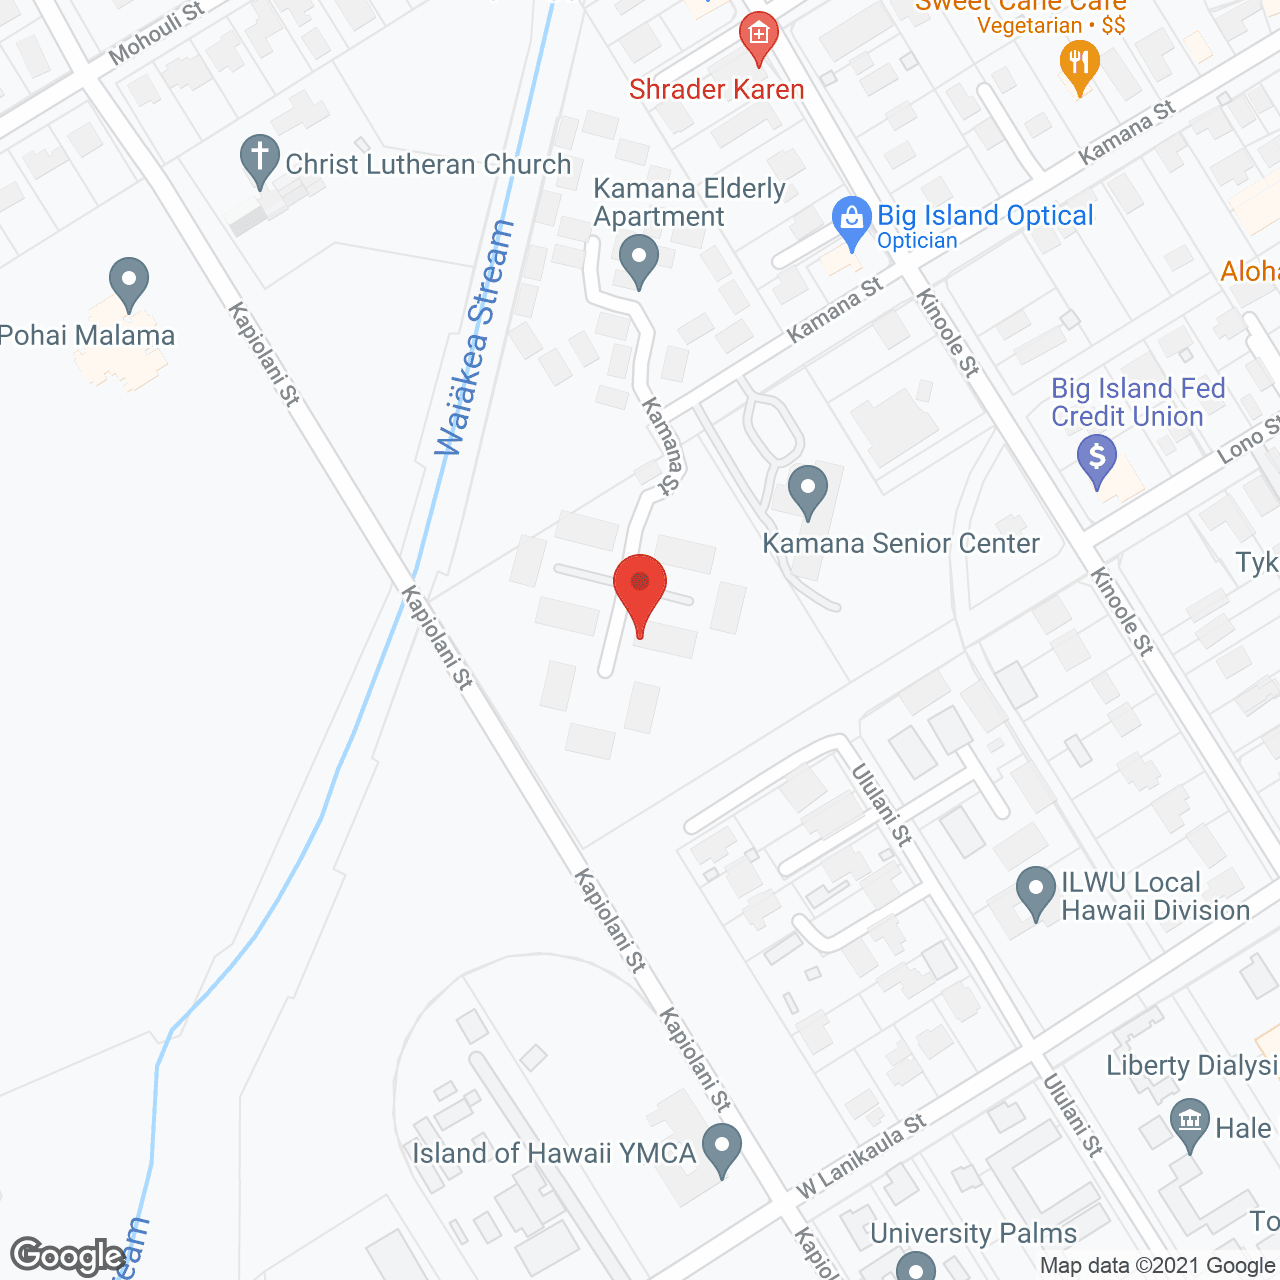 Kamana Elderly Apartment in google map